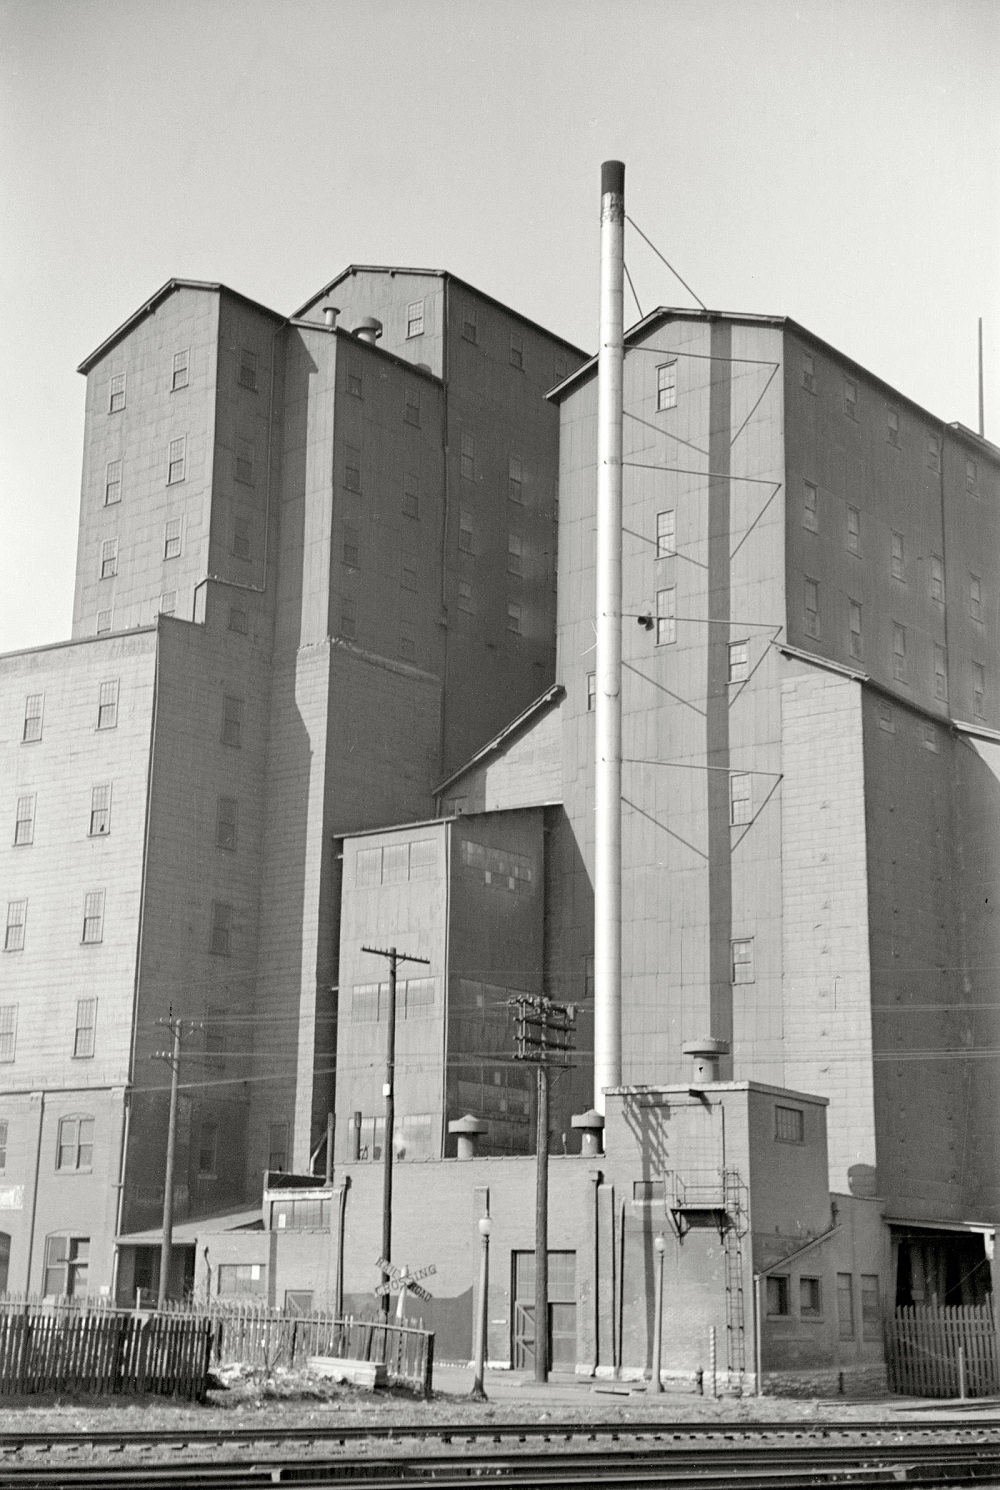 Grain elevator on riverfront, St. Louis, Missouri, January 1939